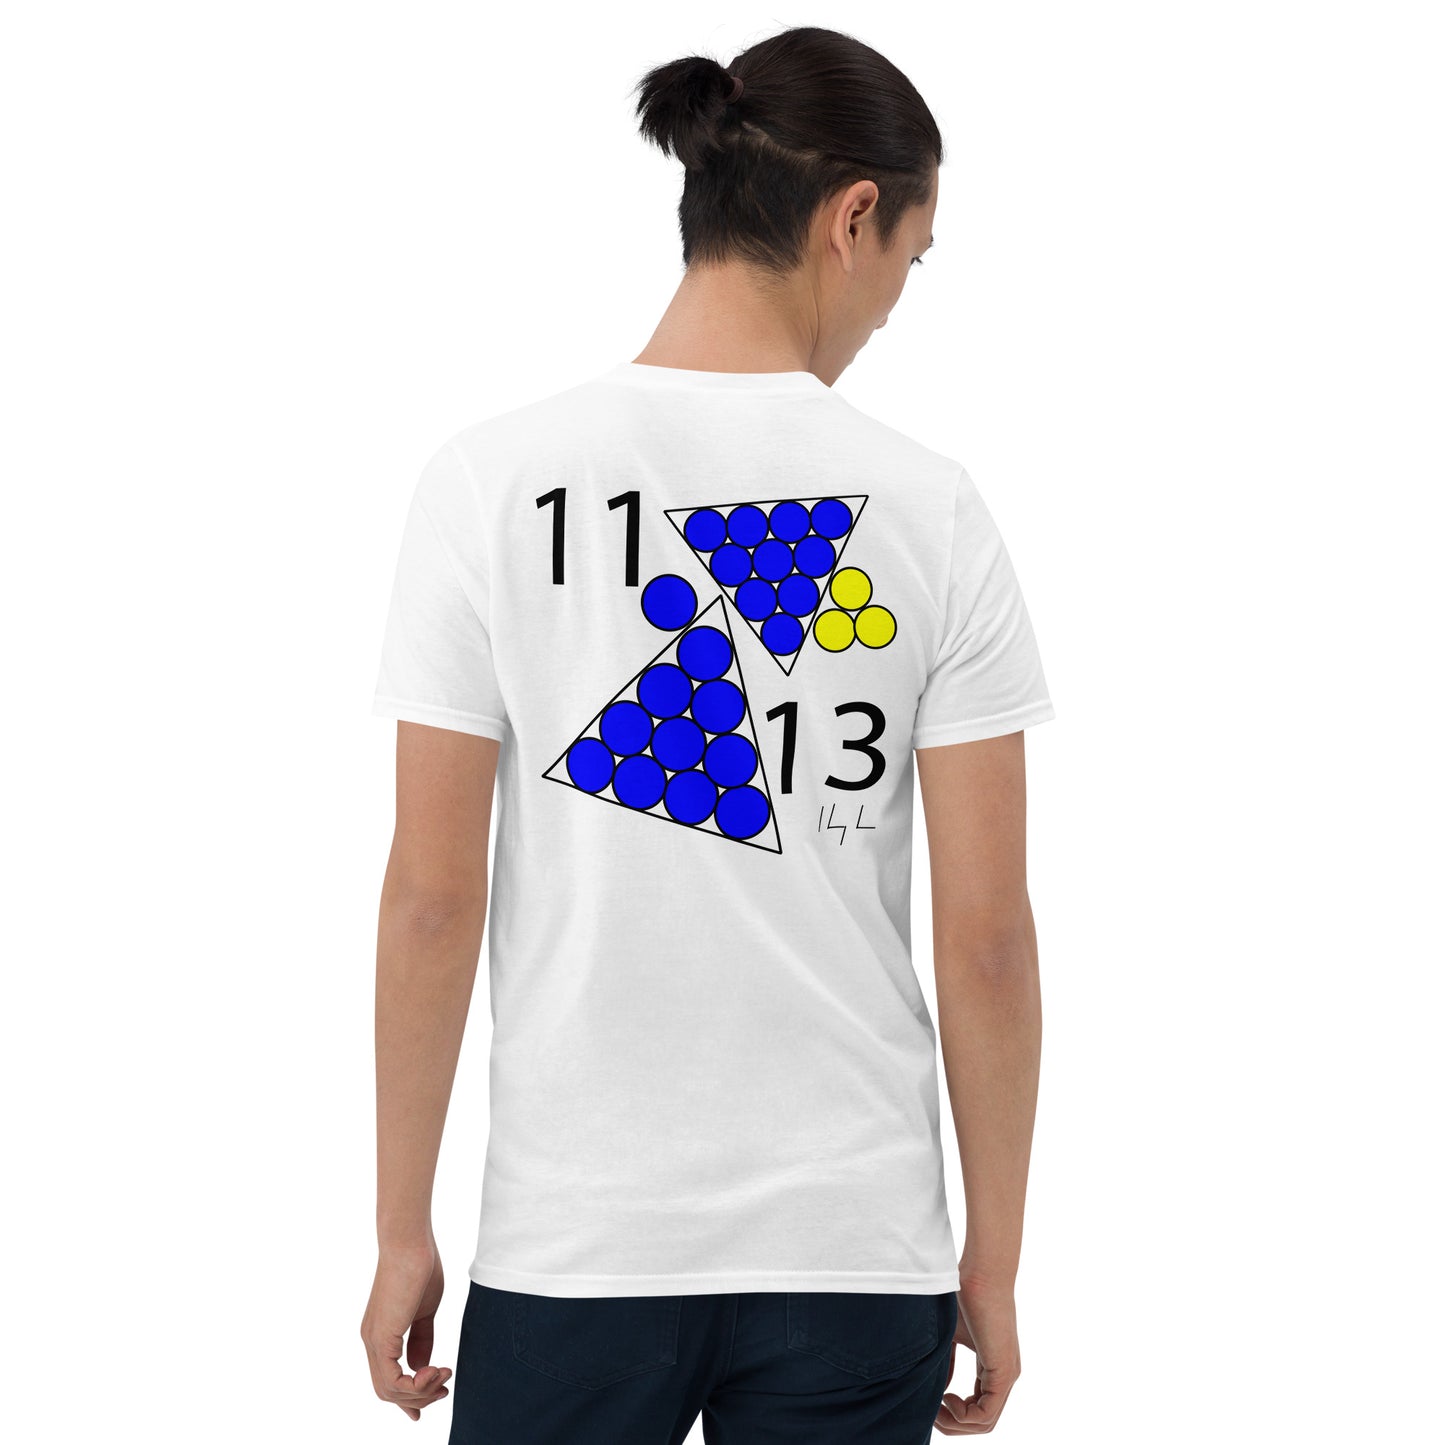 November 13th Blue T-Shirt at 11:13 1113 - -Lighten Your Life [ItsAboutTime.Life][date]